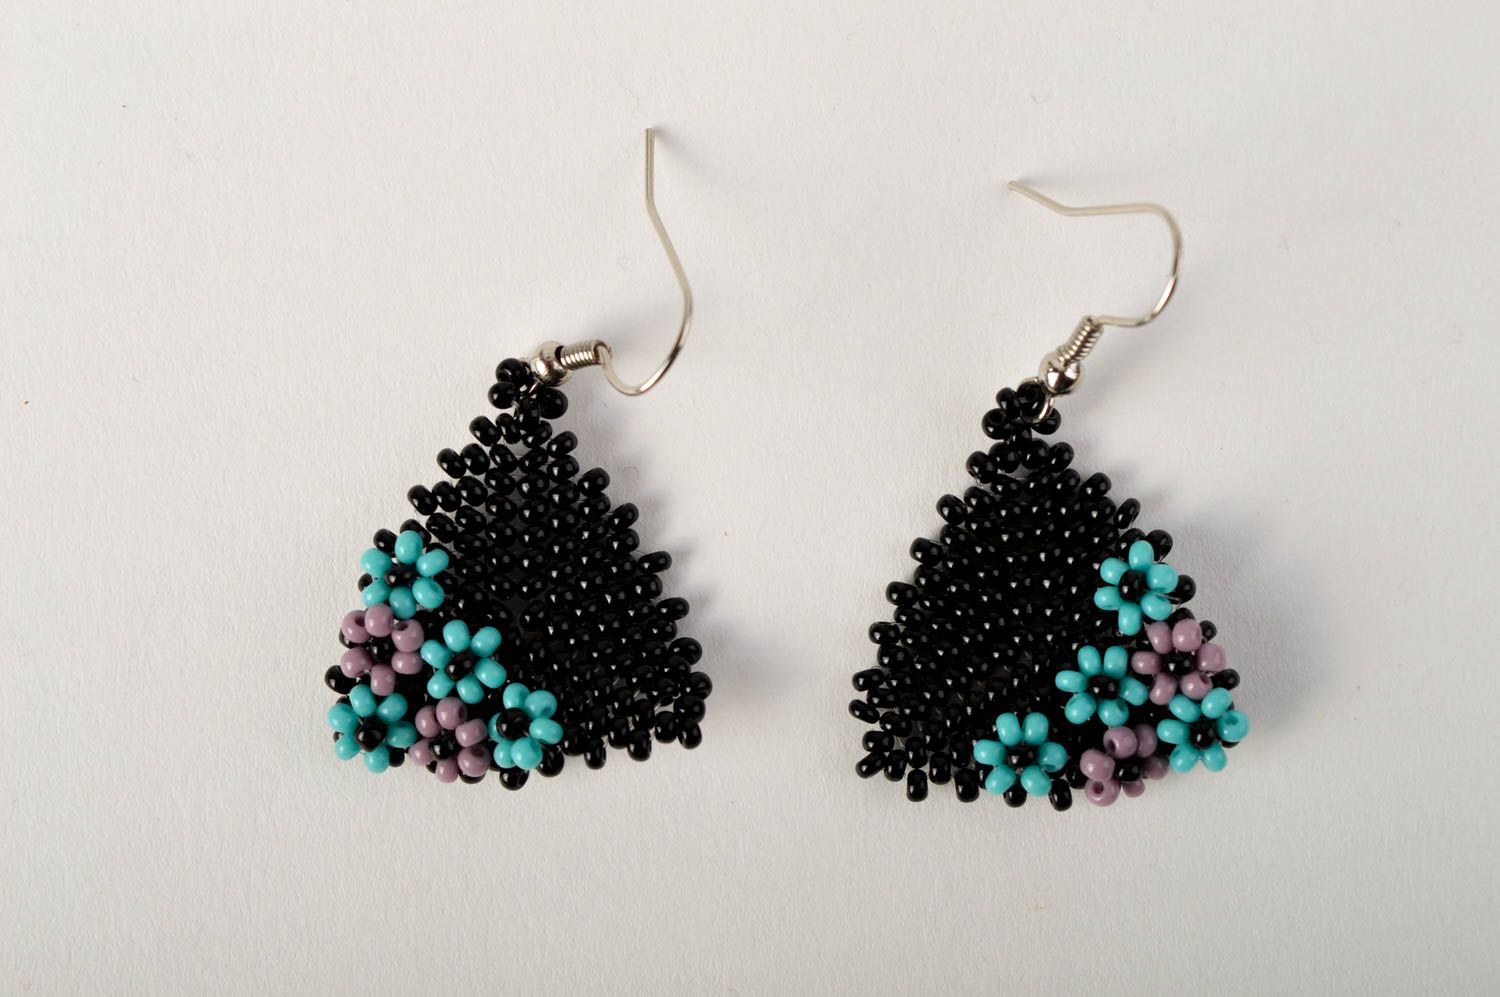 Unusual handmade beaded earrings fashion tips costume jewelry designs gift ideas photo 2